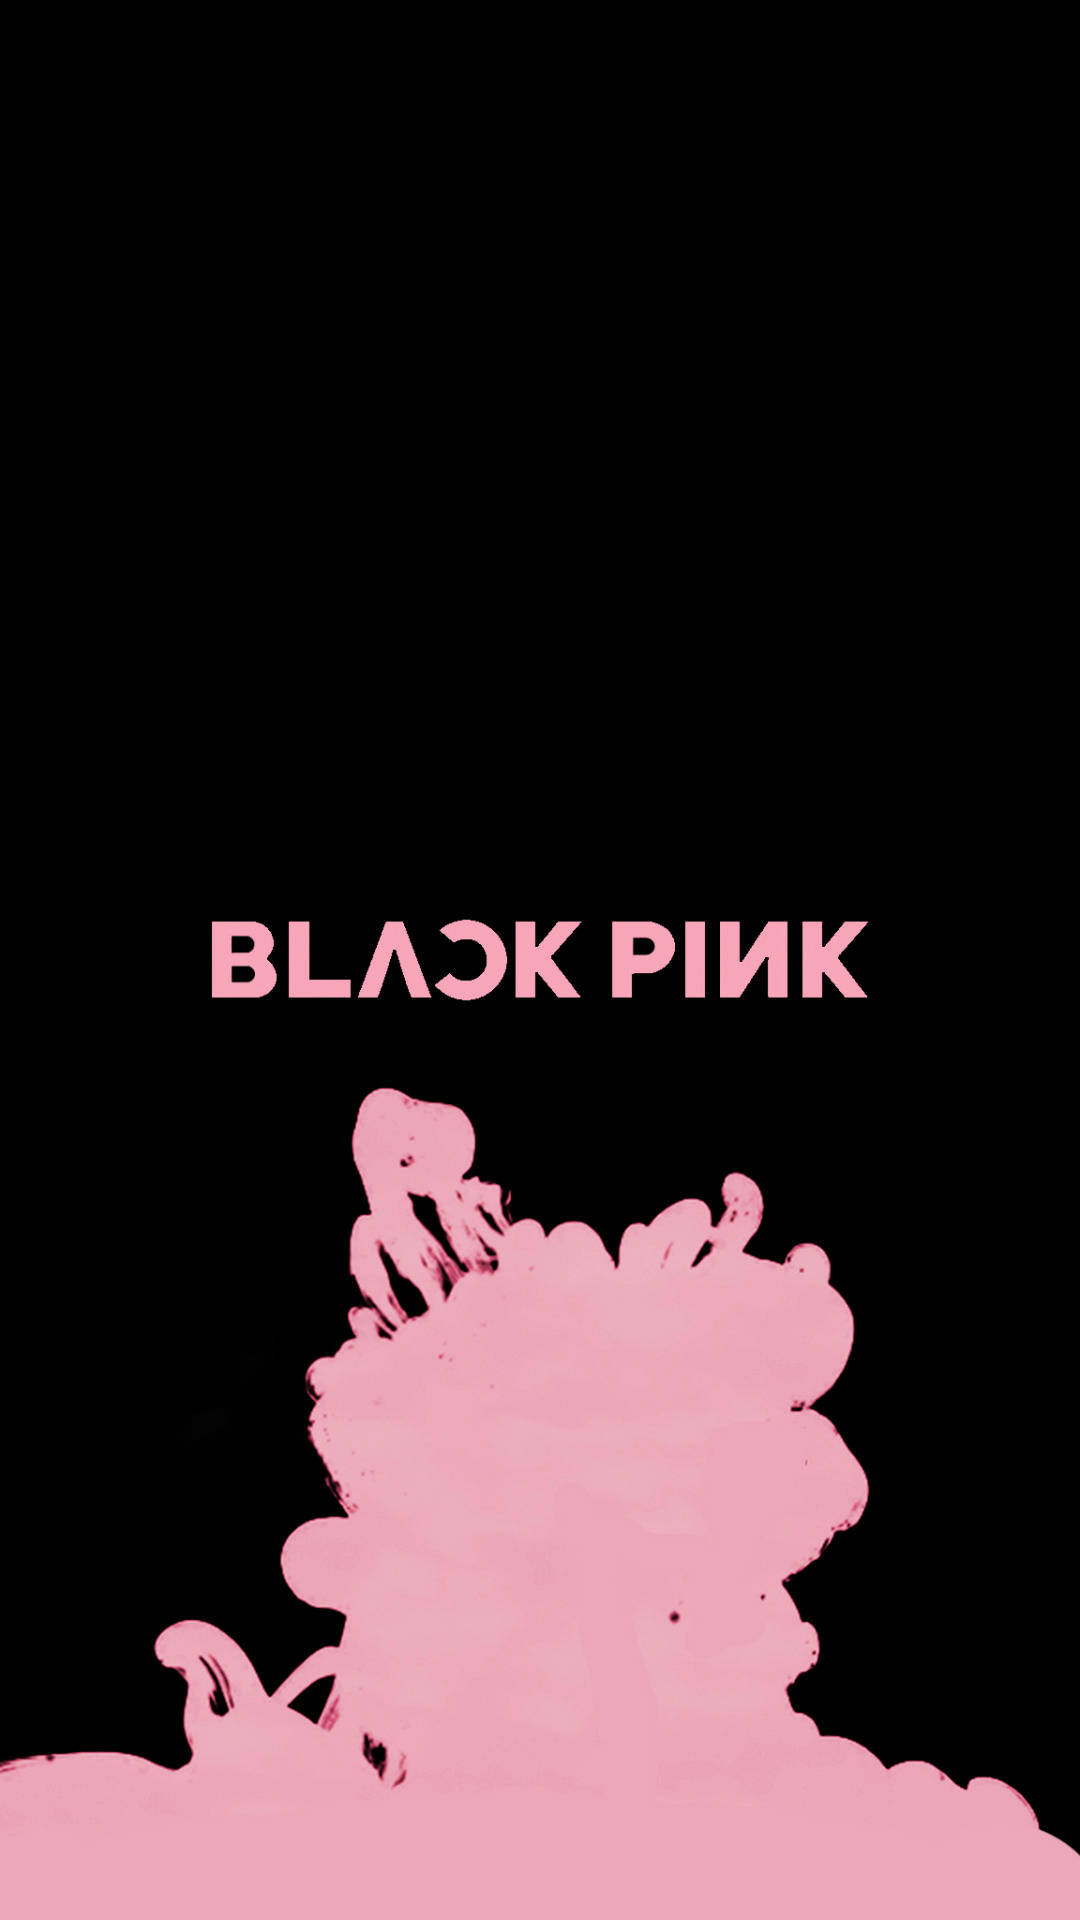 Blackpink Logo With Pink Smoke Background